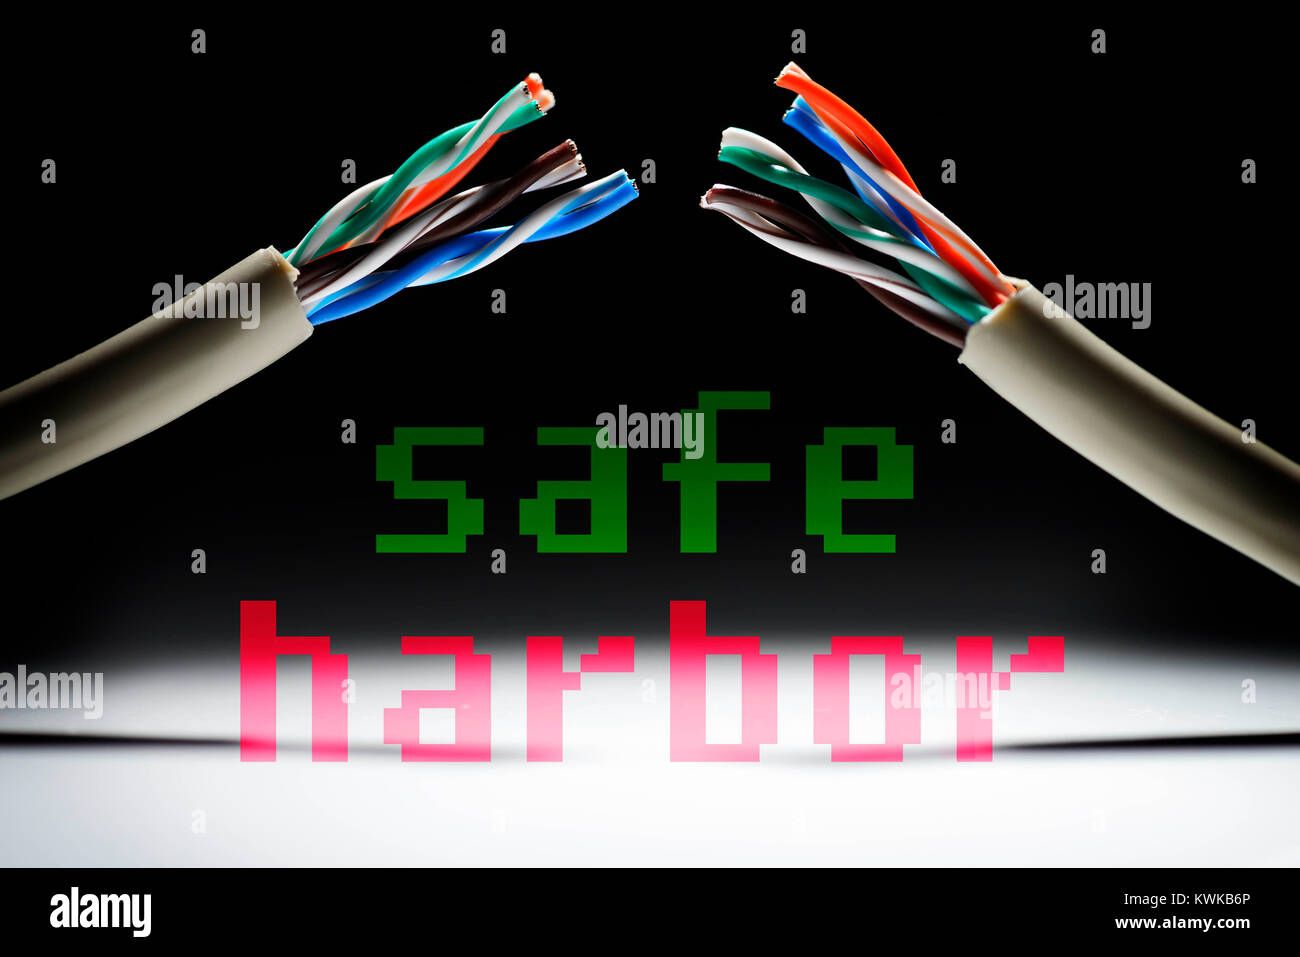 Cut Internet cable, data protection agreement safe Harbor invalid, Durchgeschnittenes Internetkabel, Datenschutzabkommen Safe Harbor ung?ltig Stock Photo